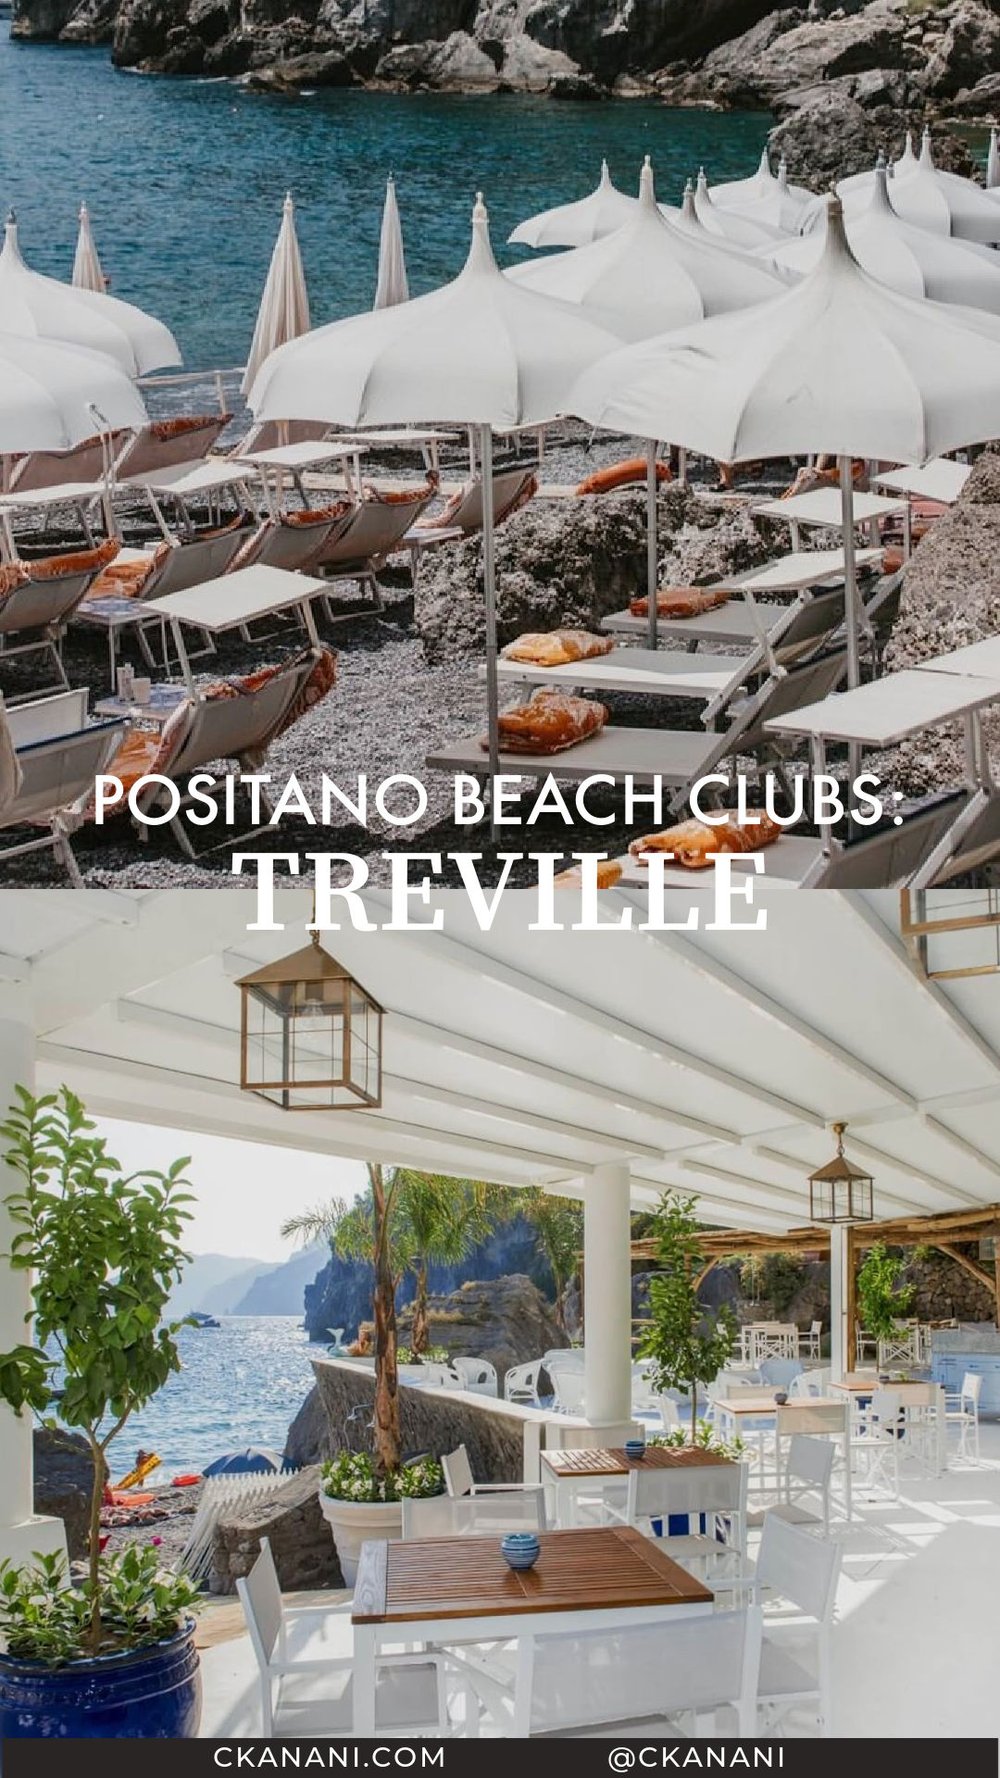 ckanani-beaches-in-positano-beach-clubs-2.jpg